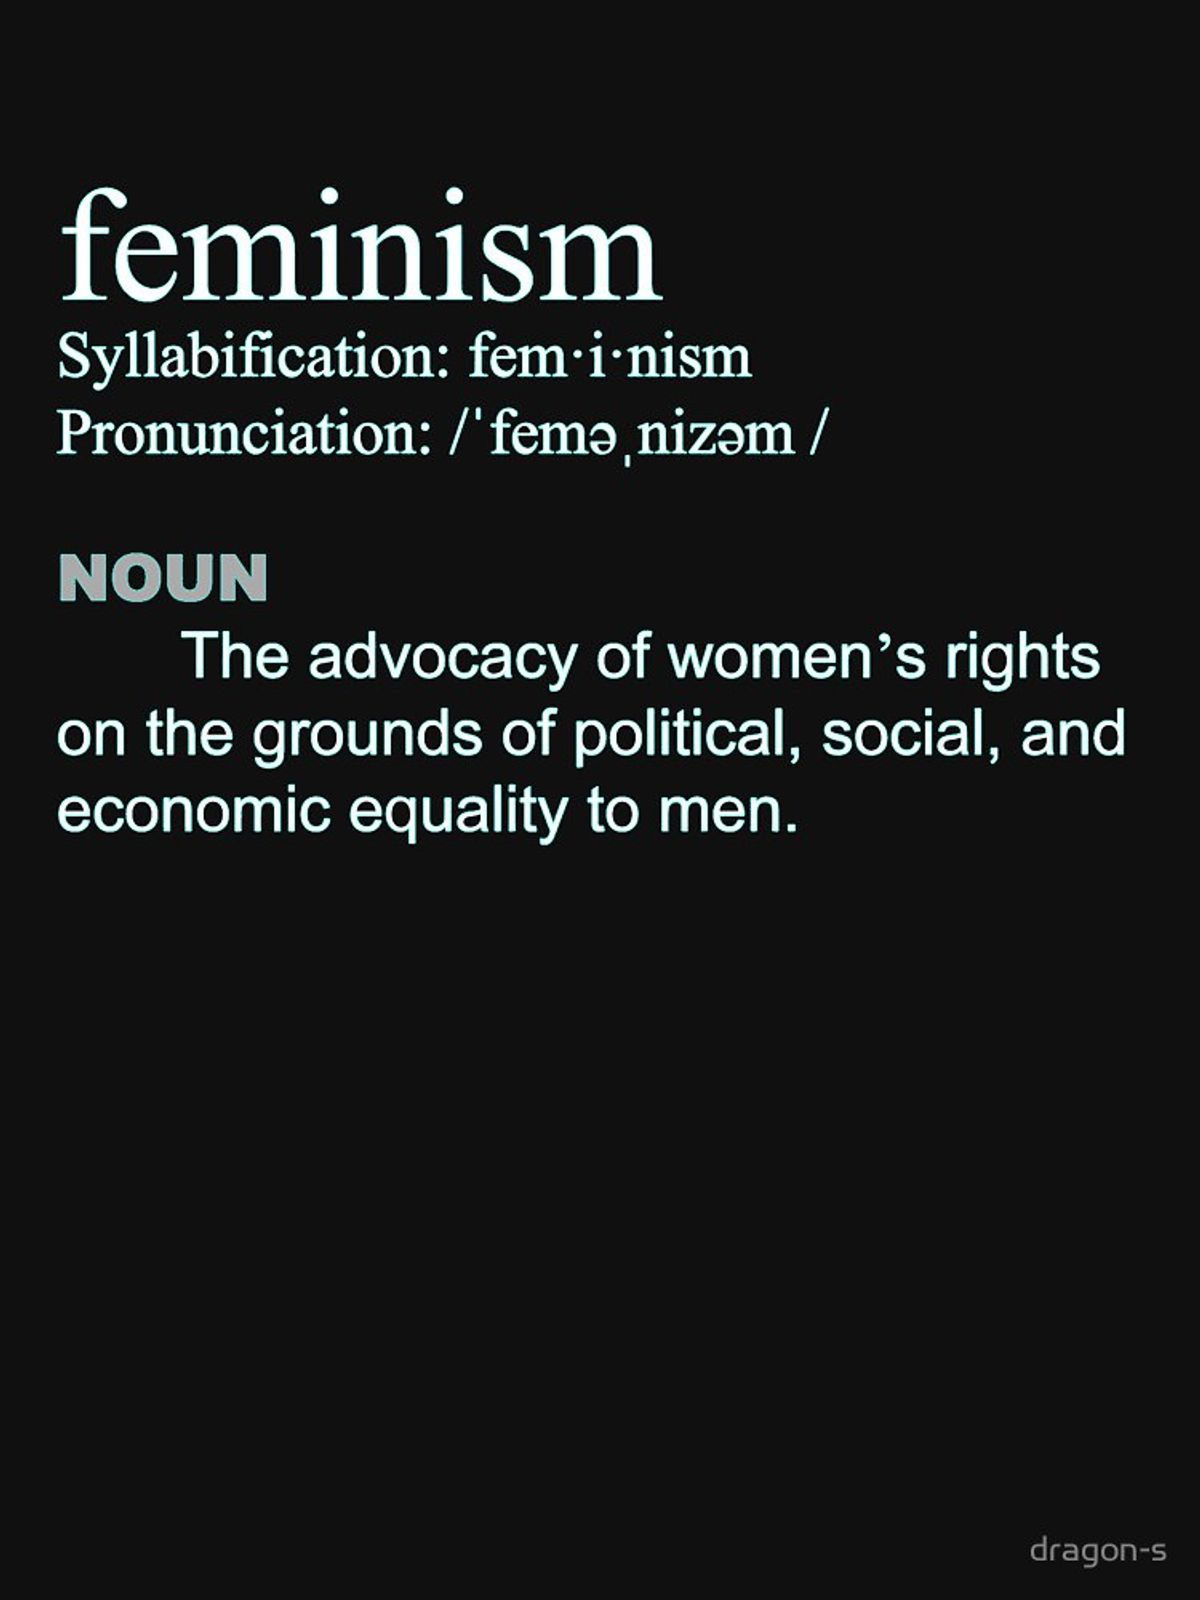 Feminism, It Is Important.